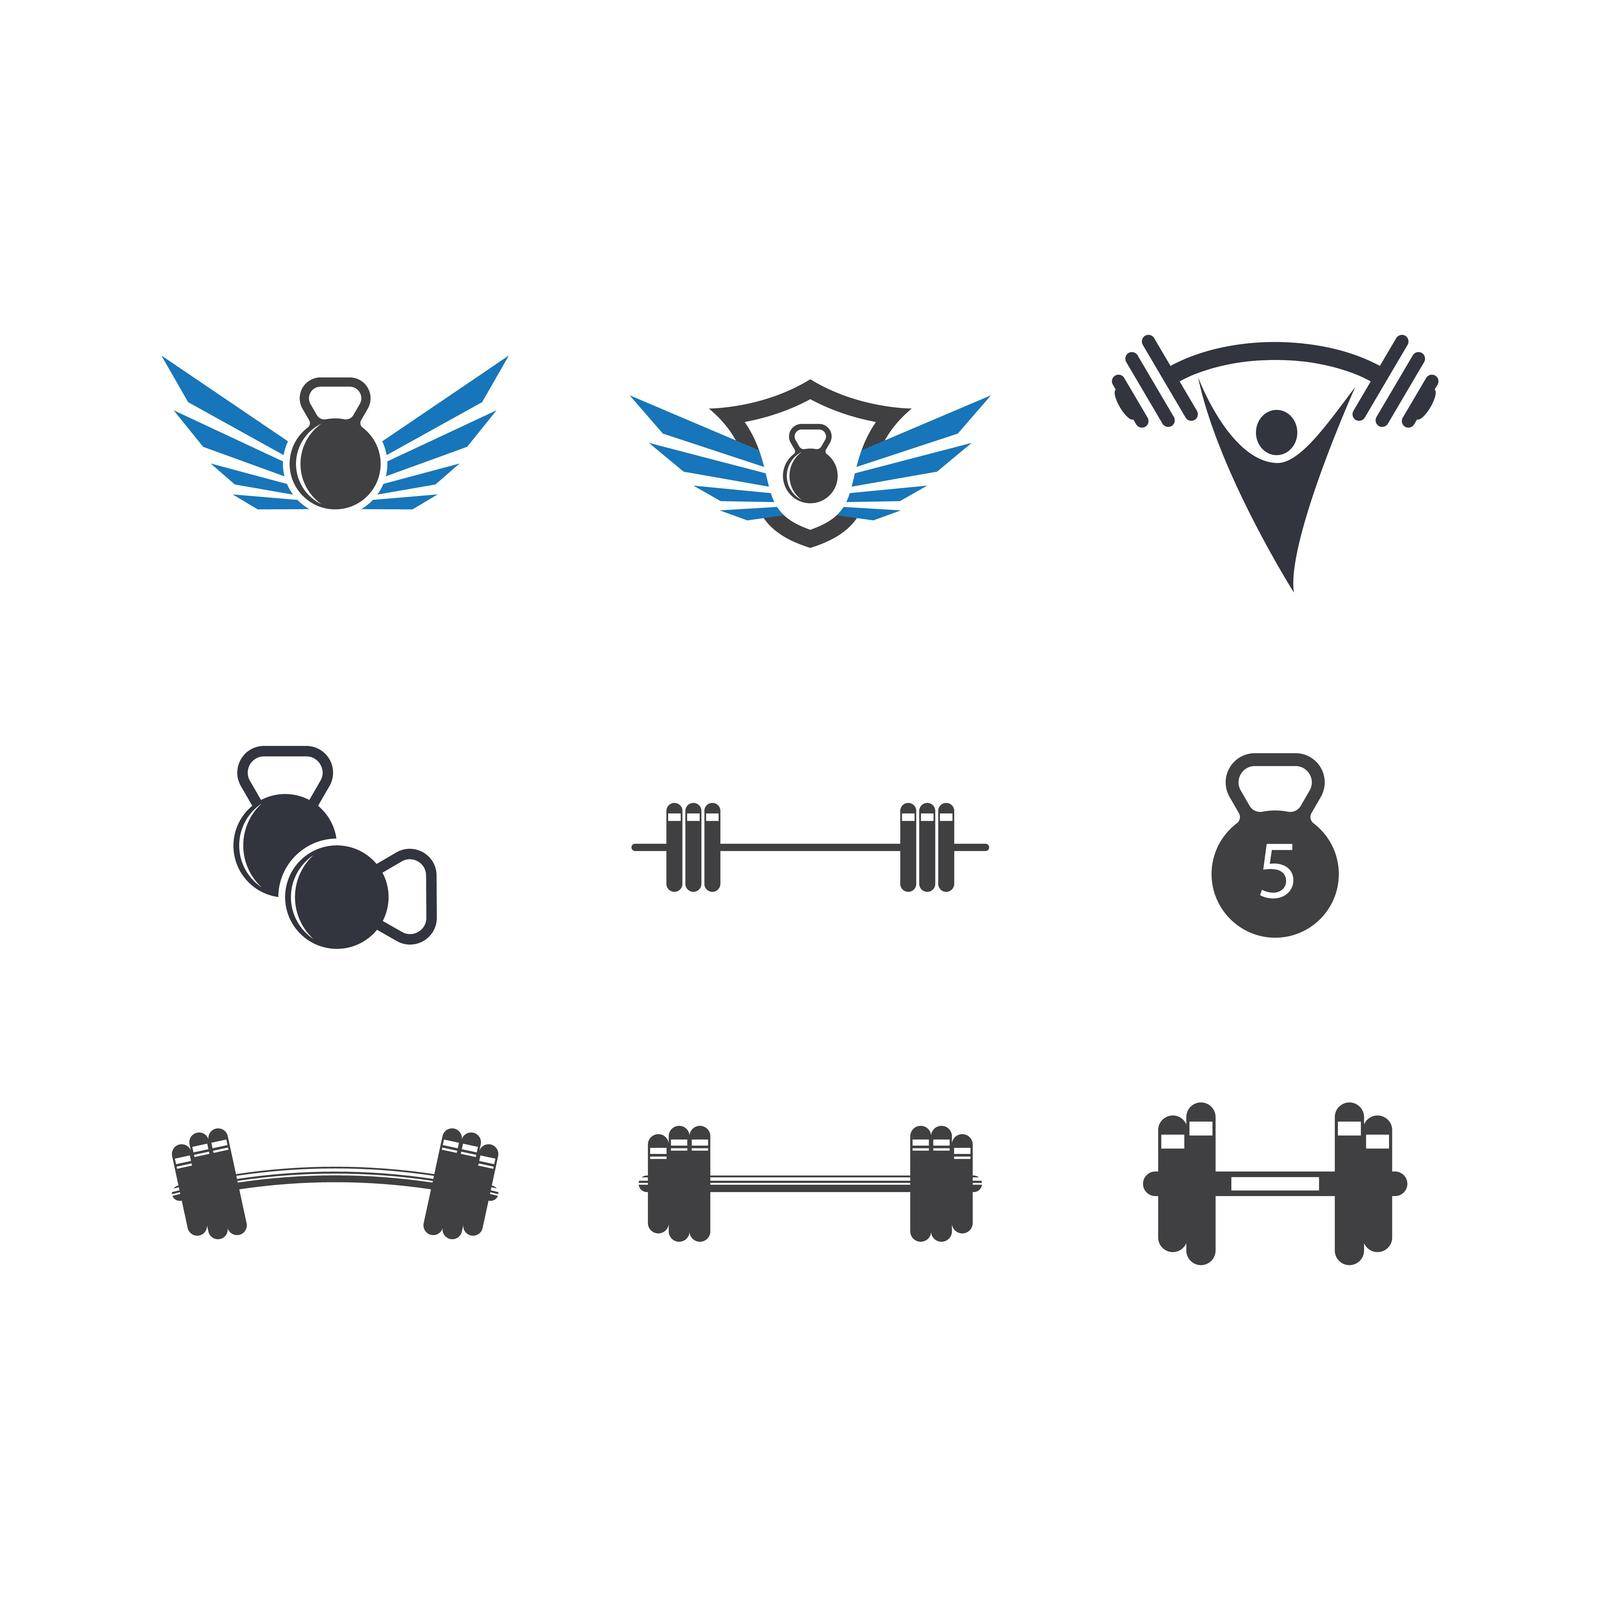 Fitness symbol illustration by Fat17